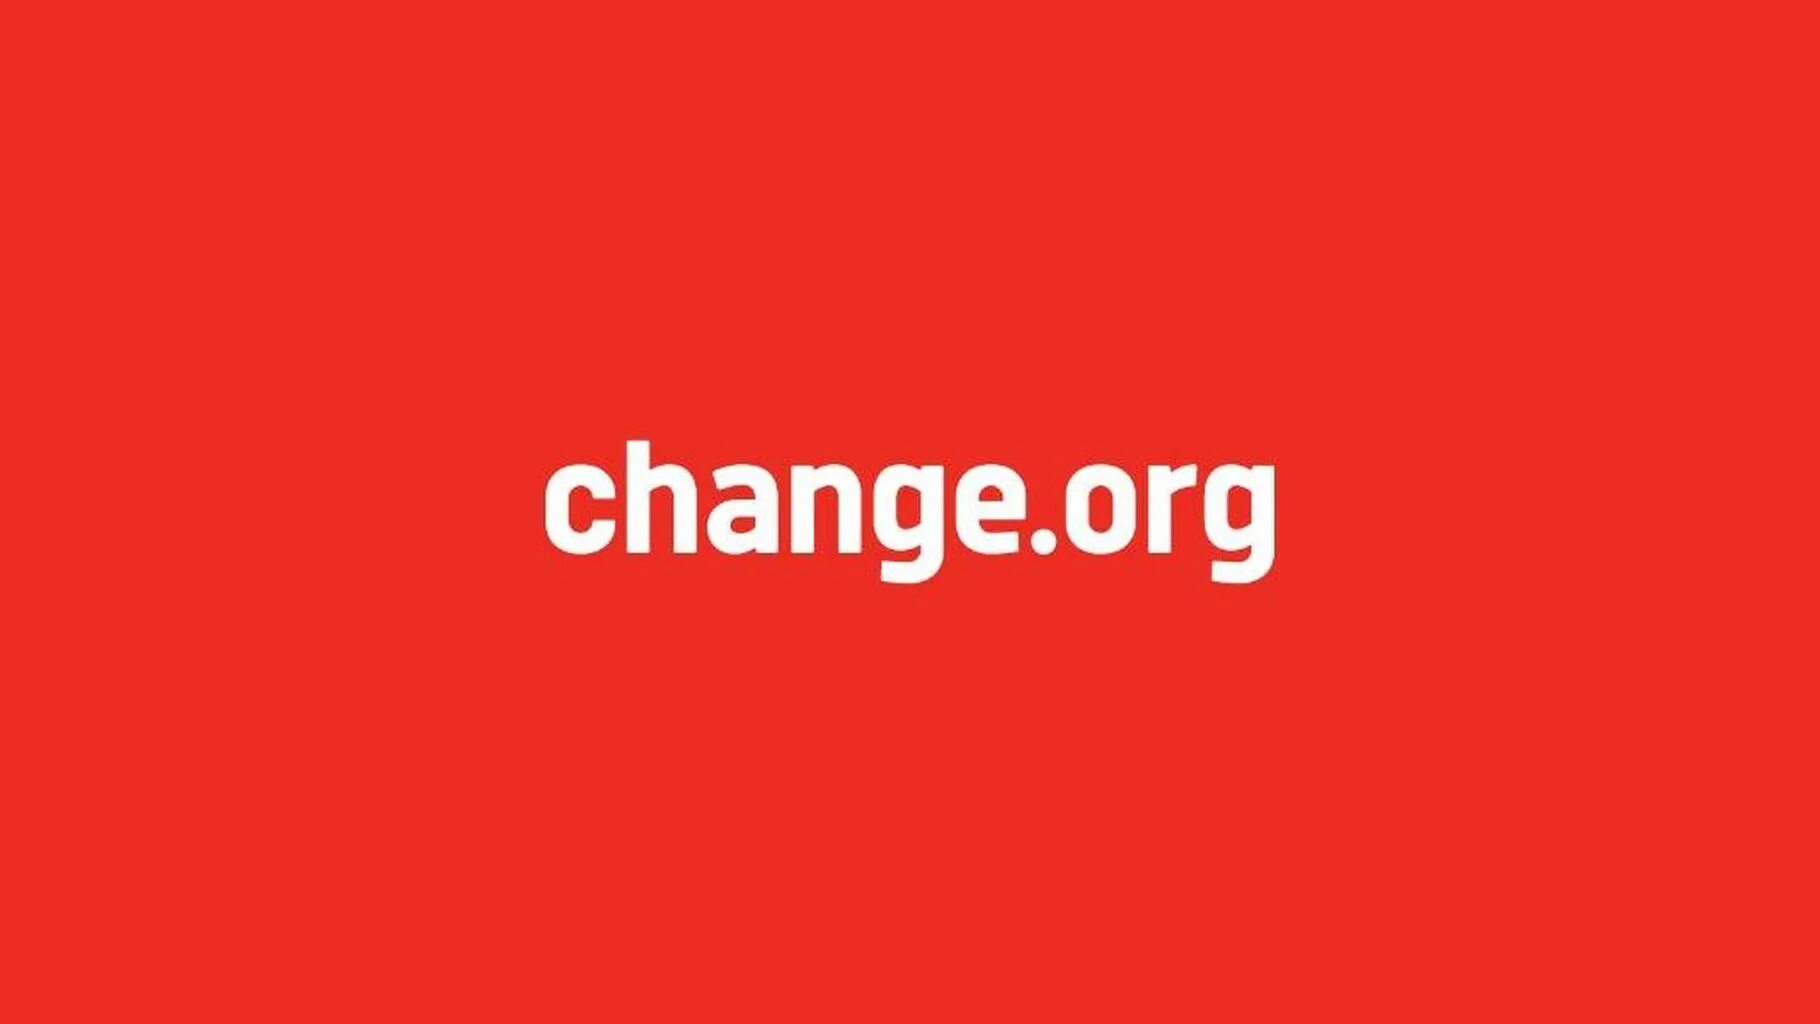 Change.org. Change org петиция. Ченч орг. Change.org logo.